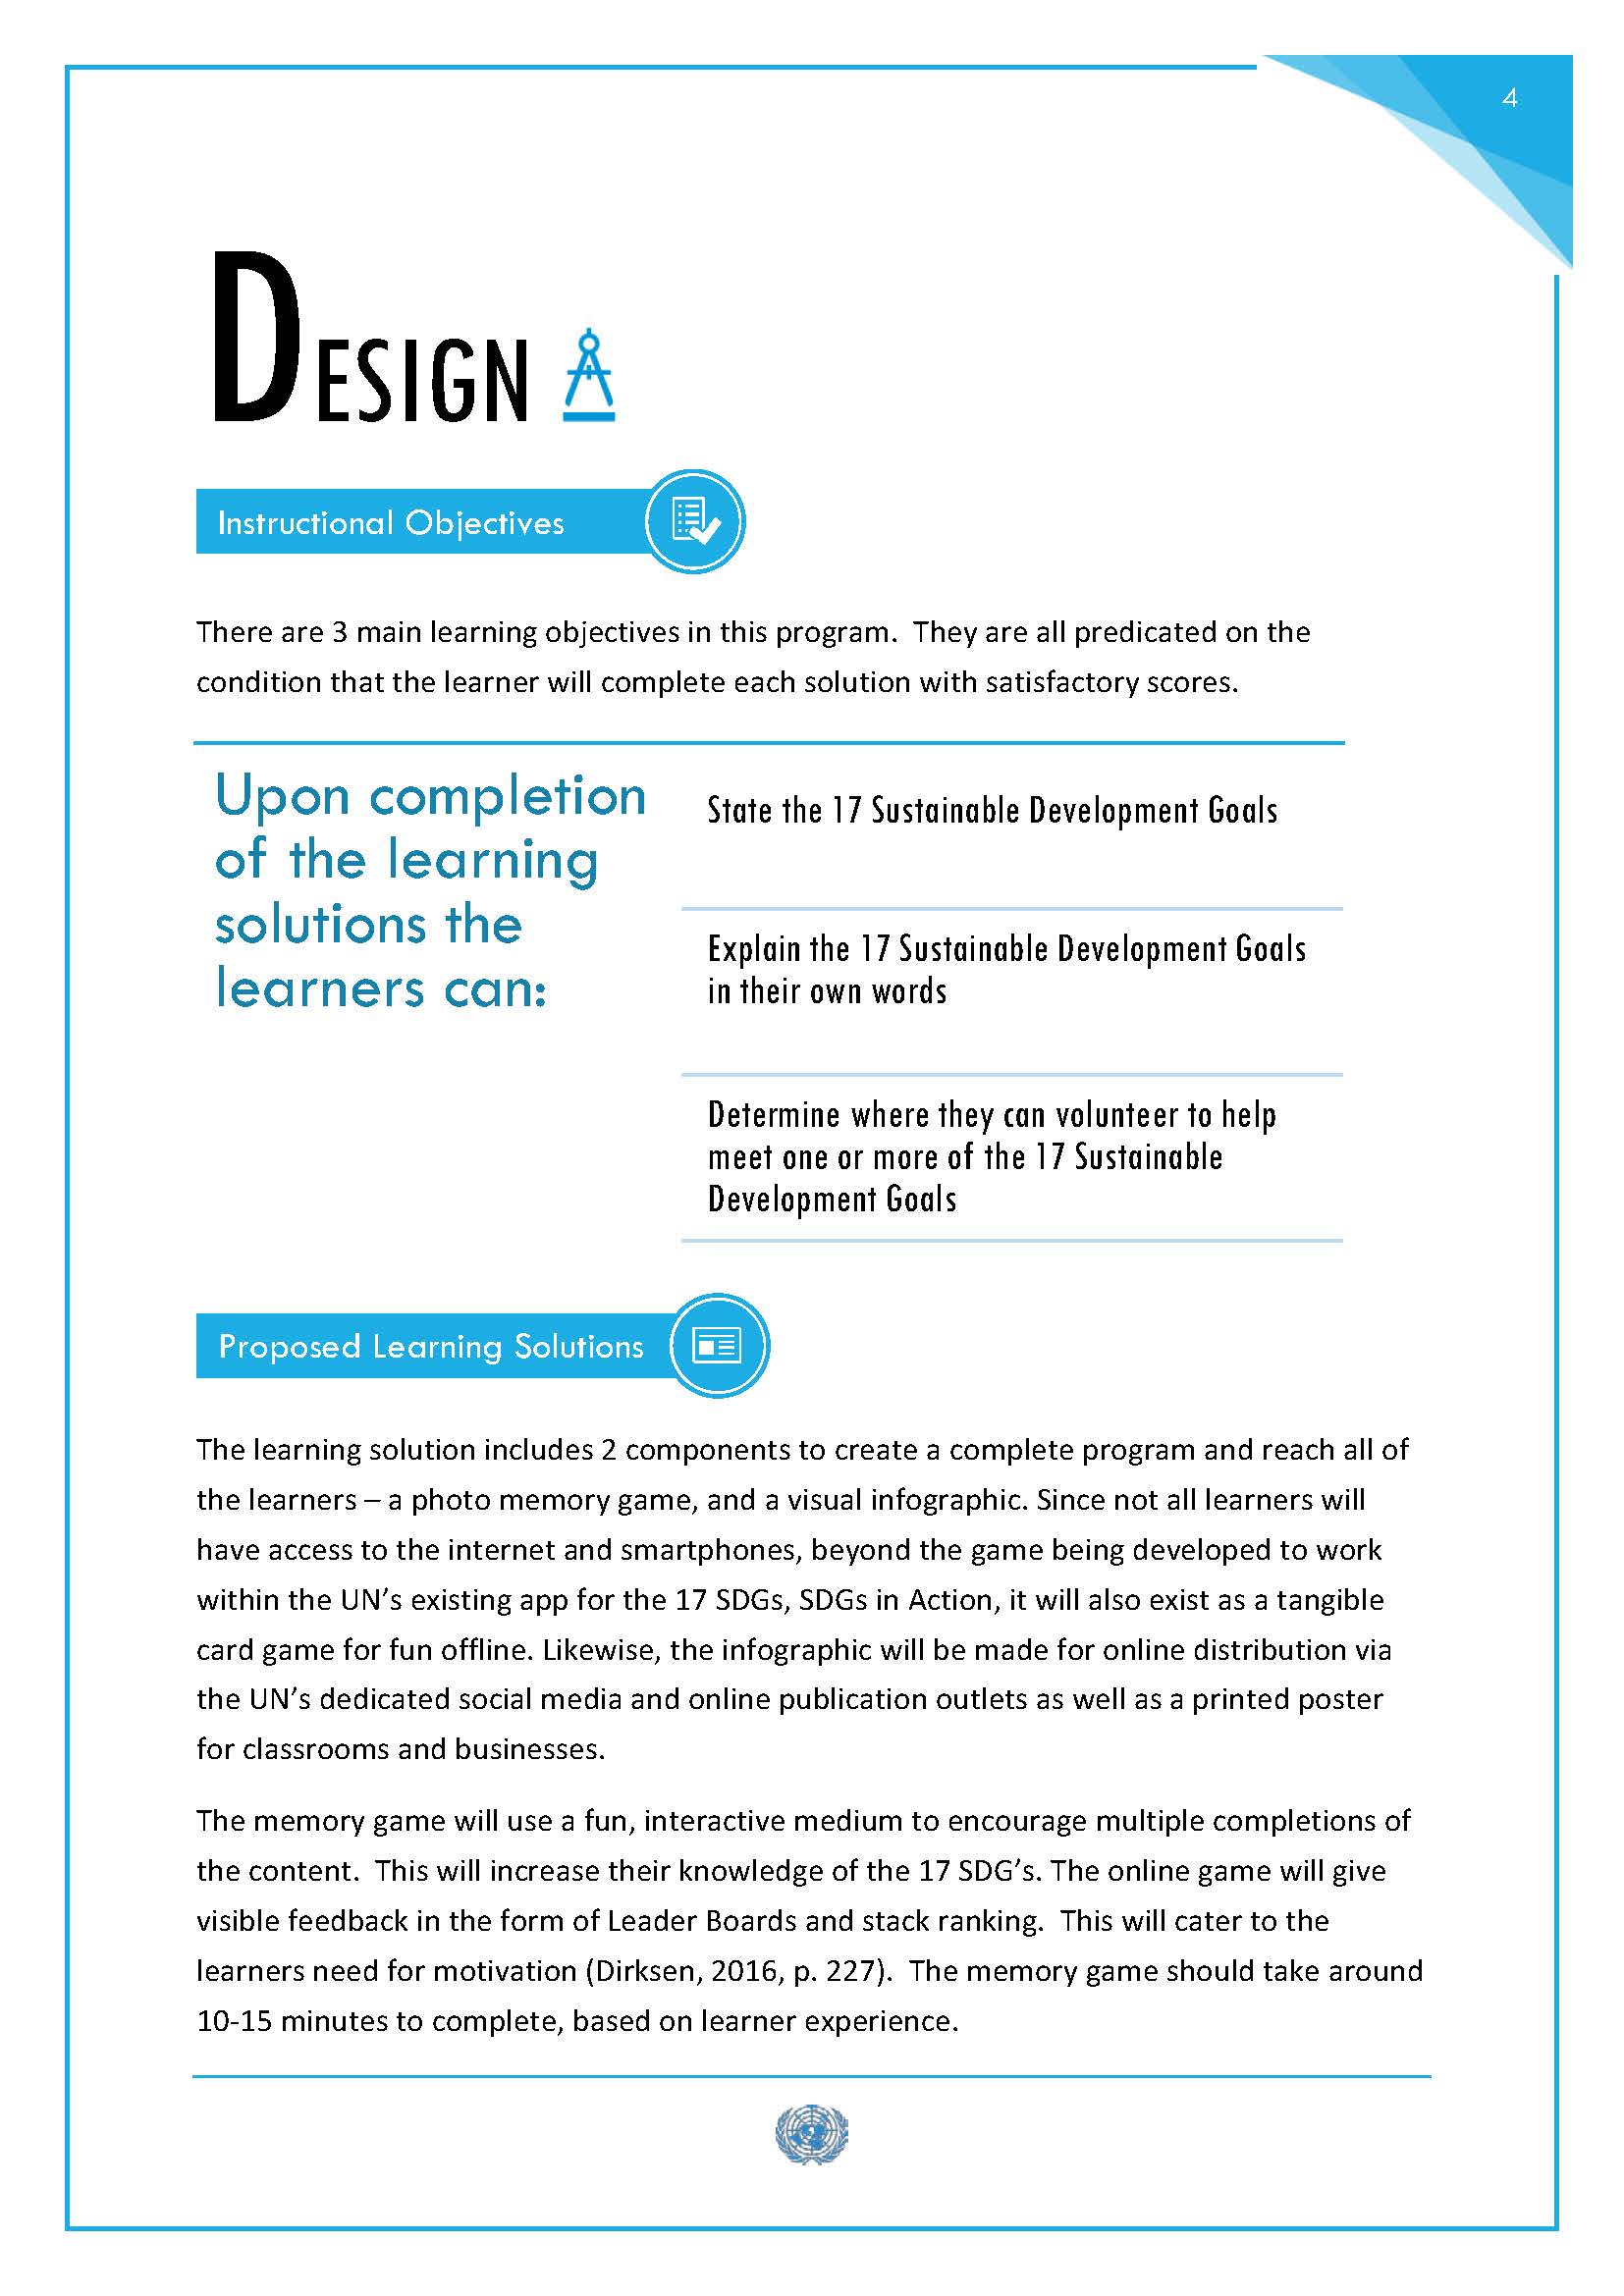 Design Document_Kraus&Beatty_Page_05.jpg